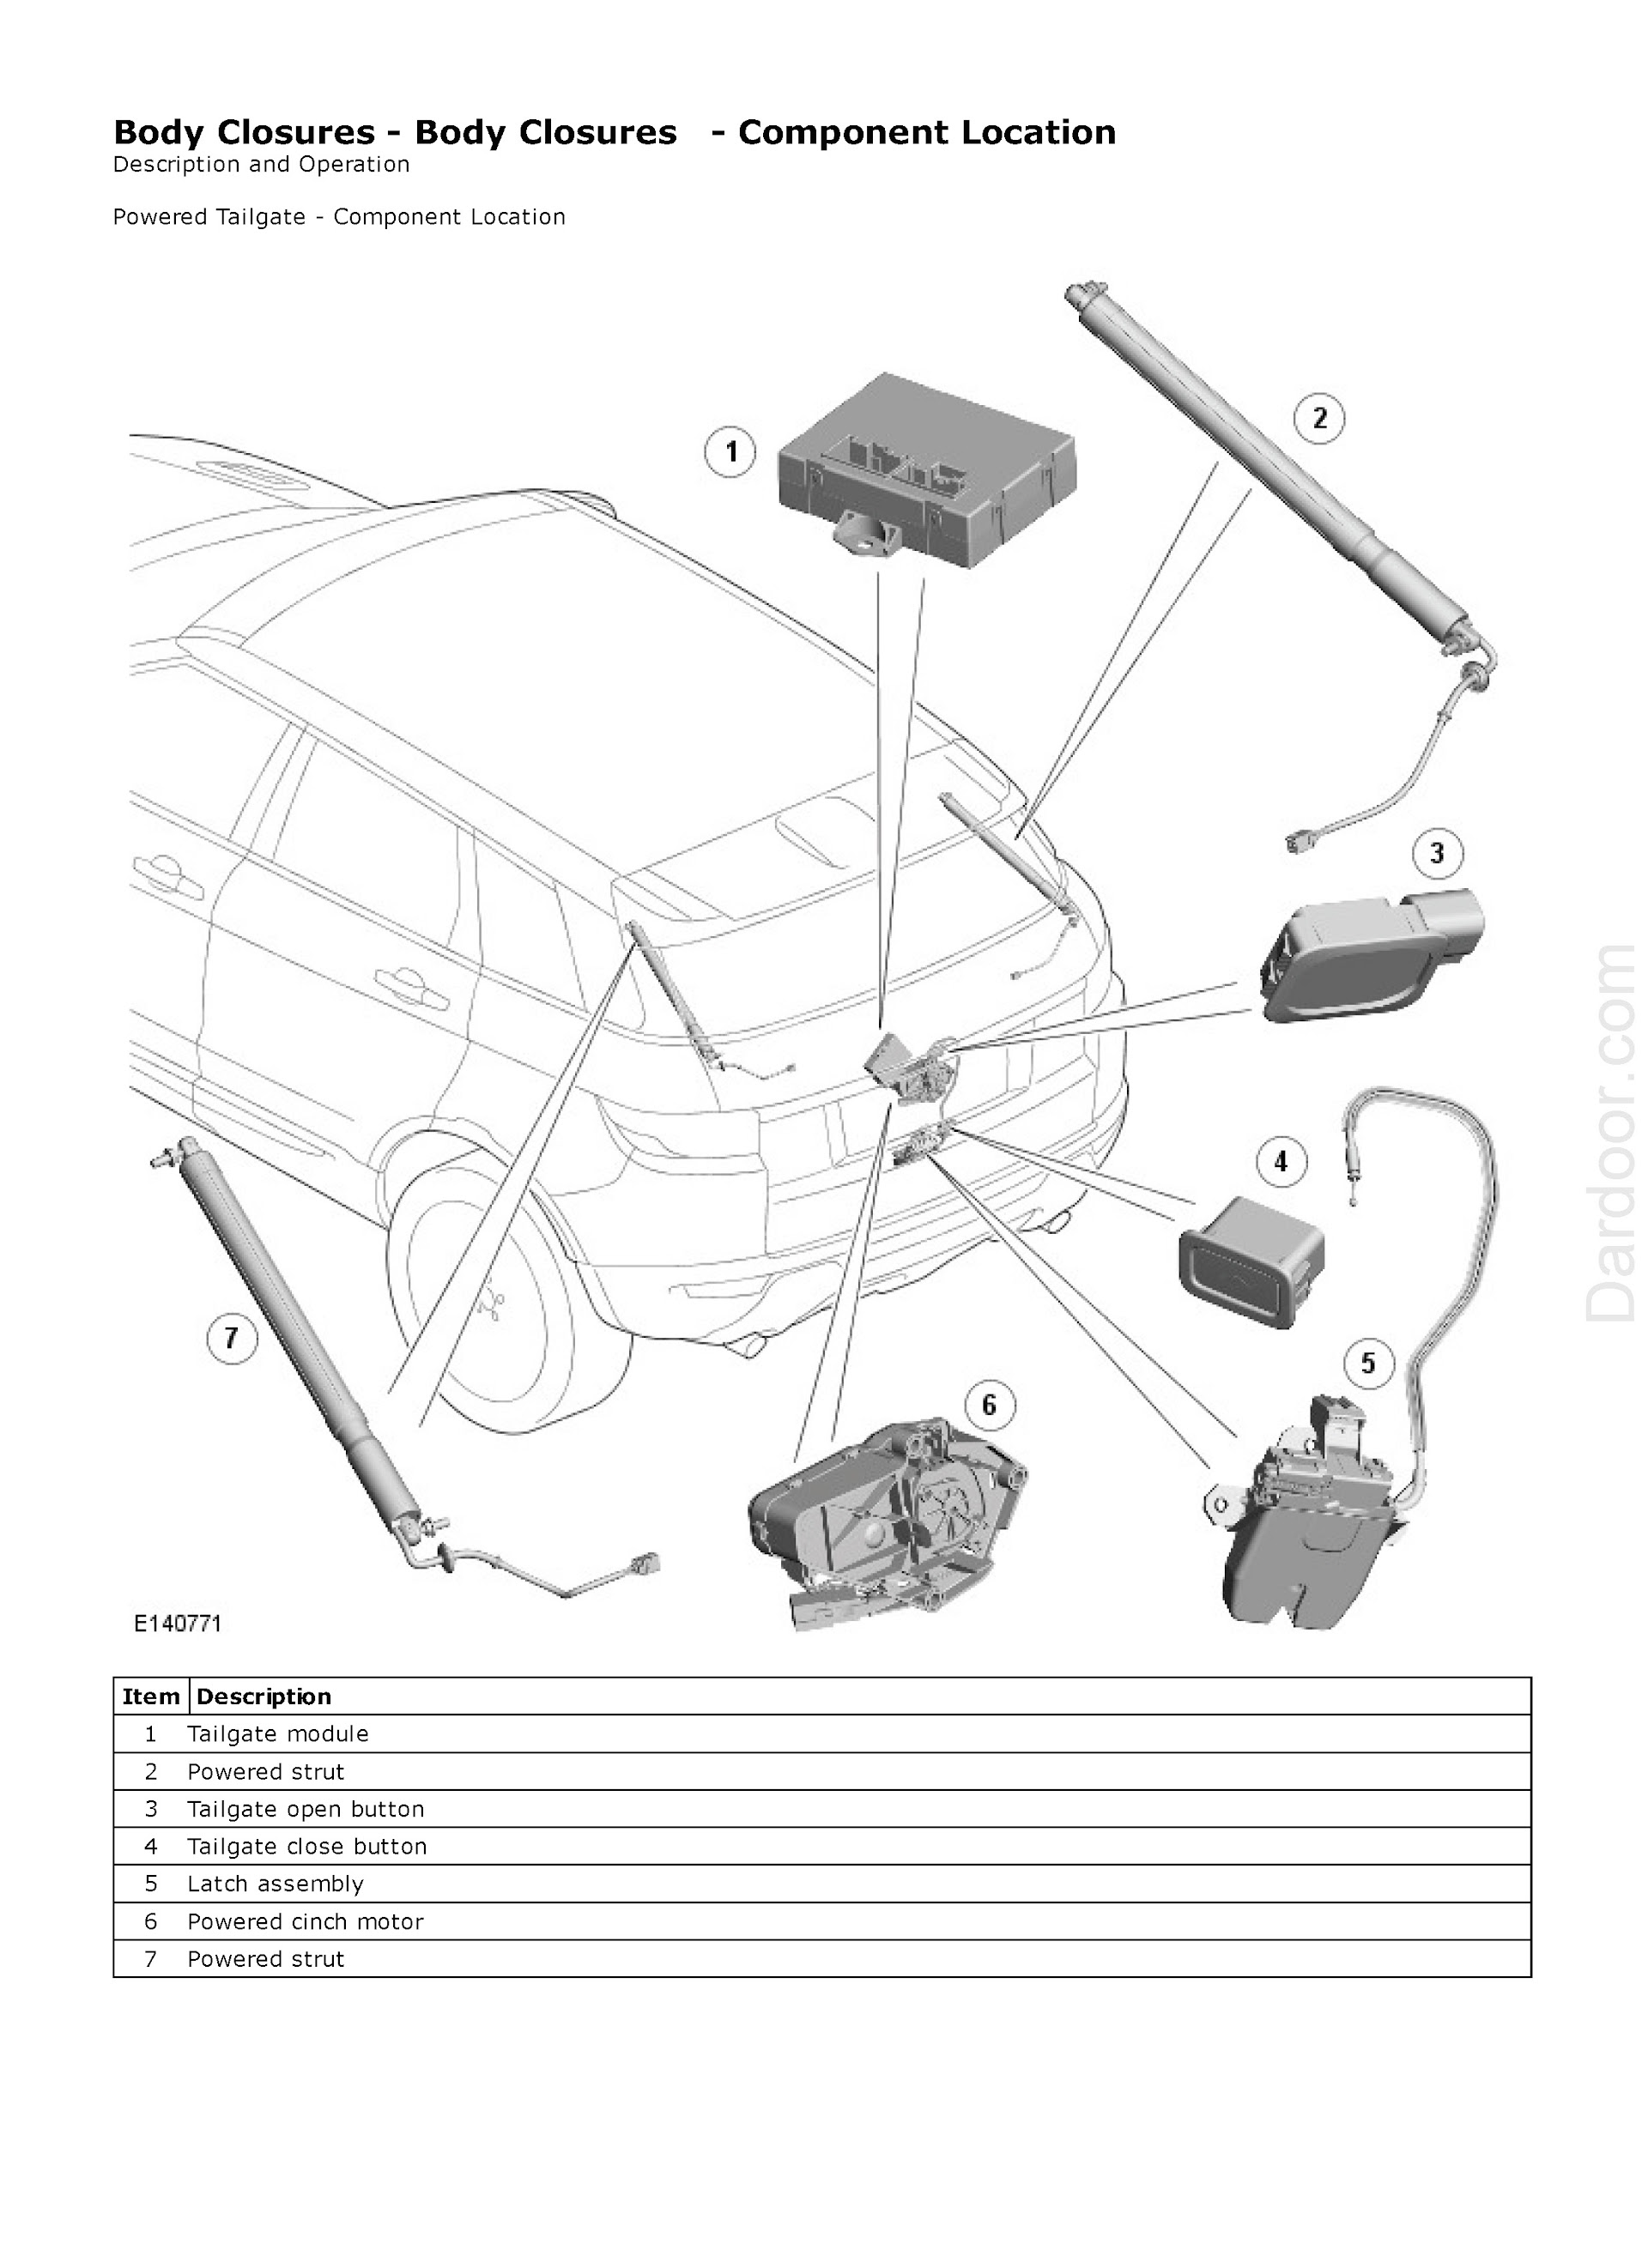 2013 Range Rover Evoque Repair Manual, Components Location